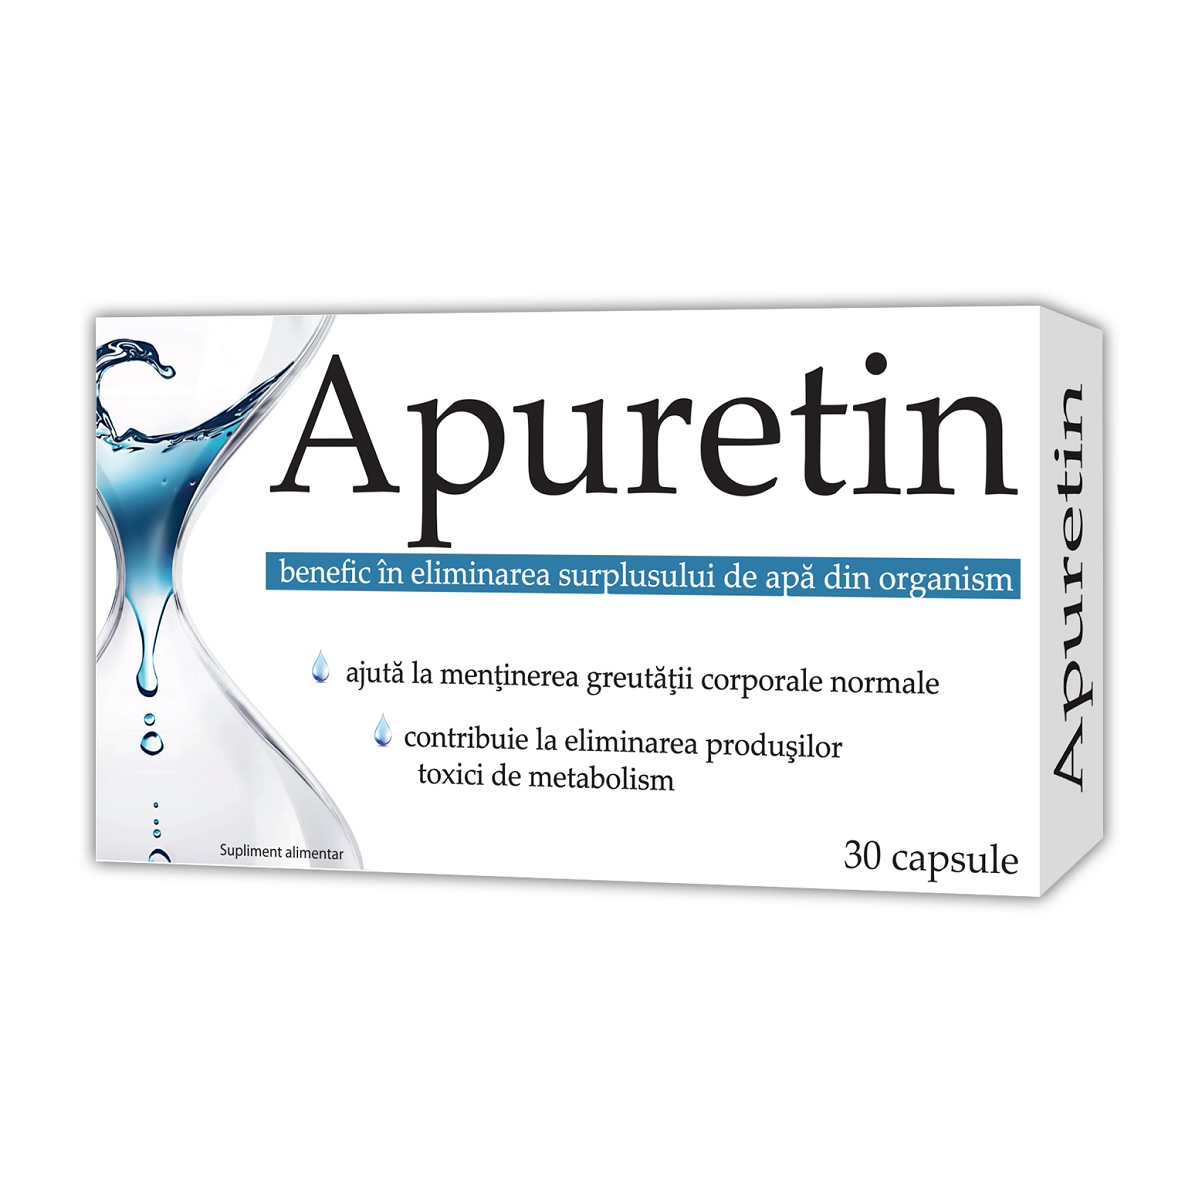 DE SLABIT - Apuretin, 30 capsule, Zdrovit, sinapis.ro